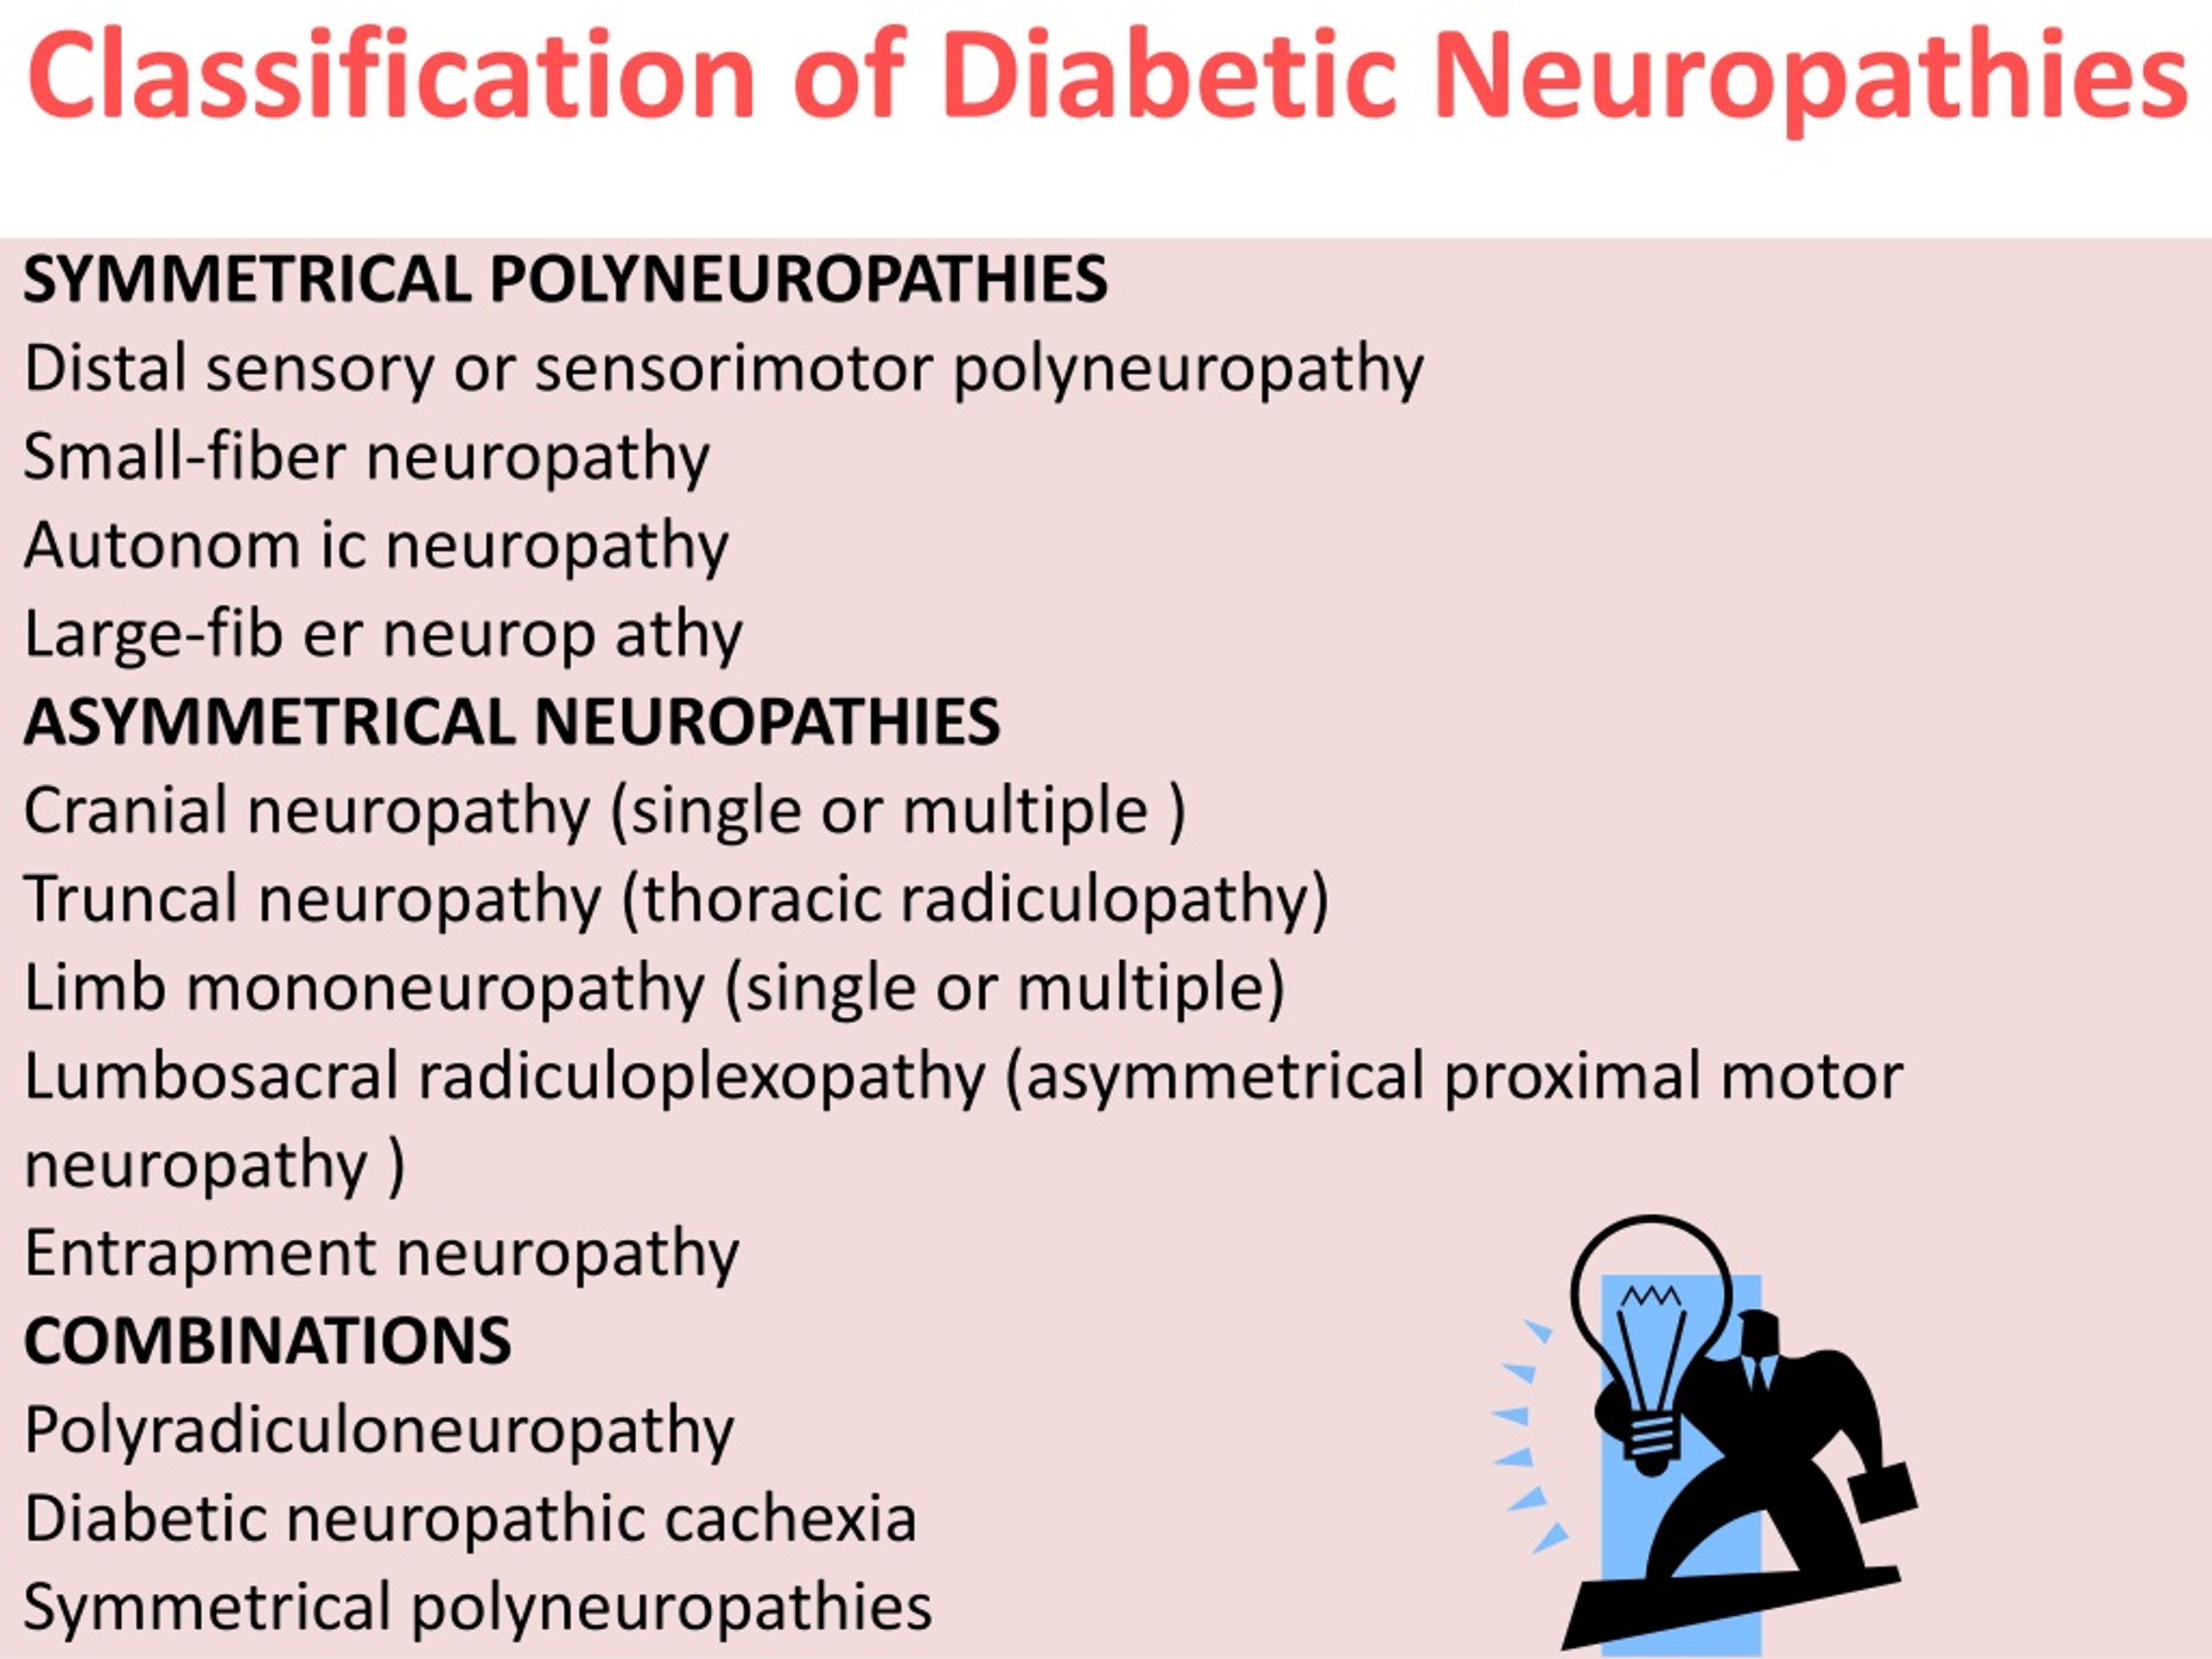 diabetic neuropathy case study ppt